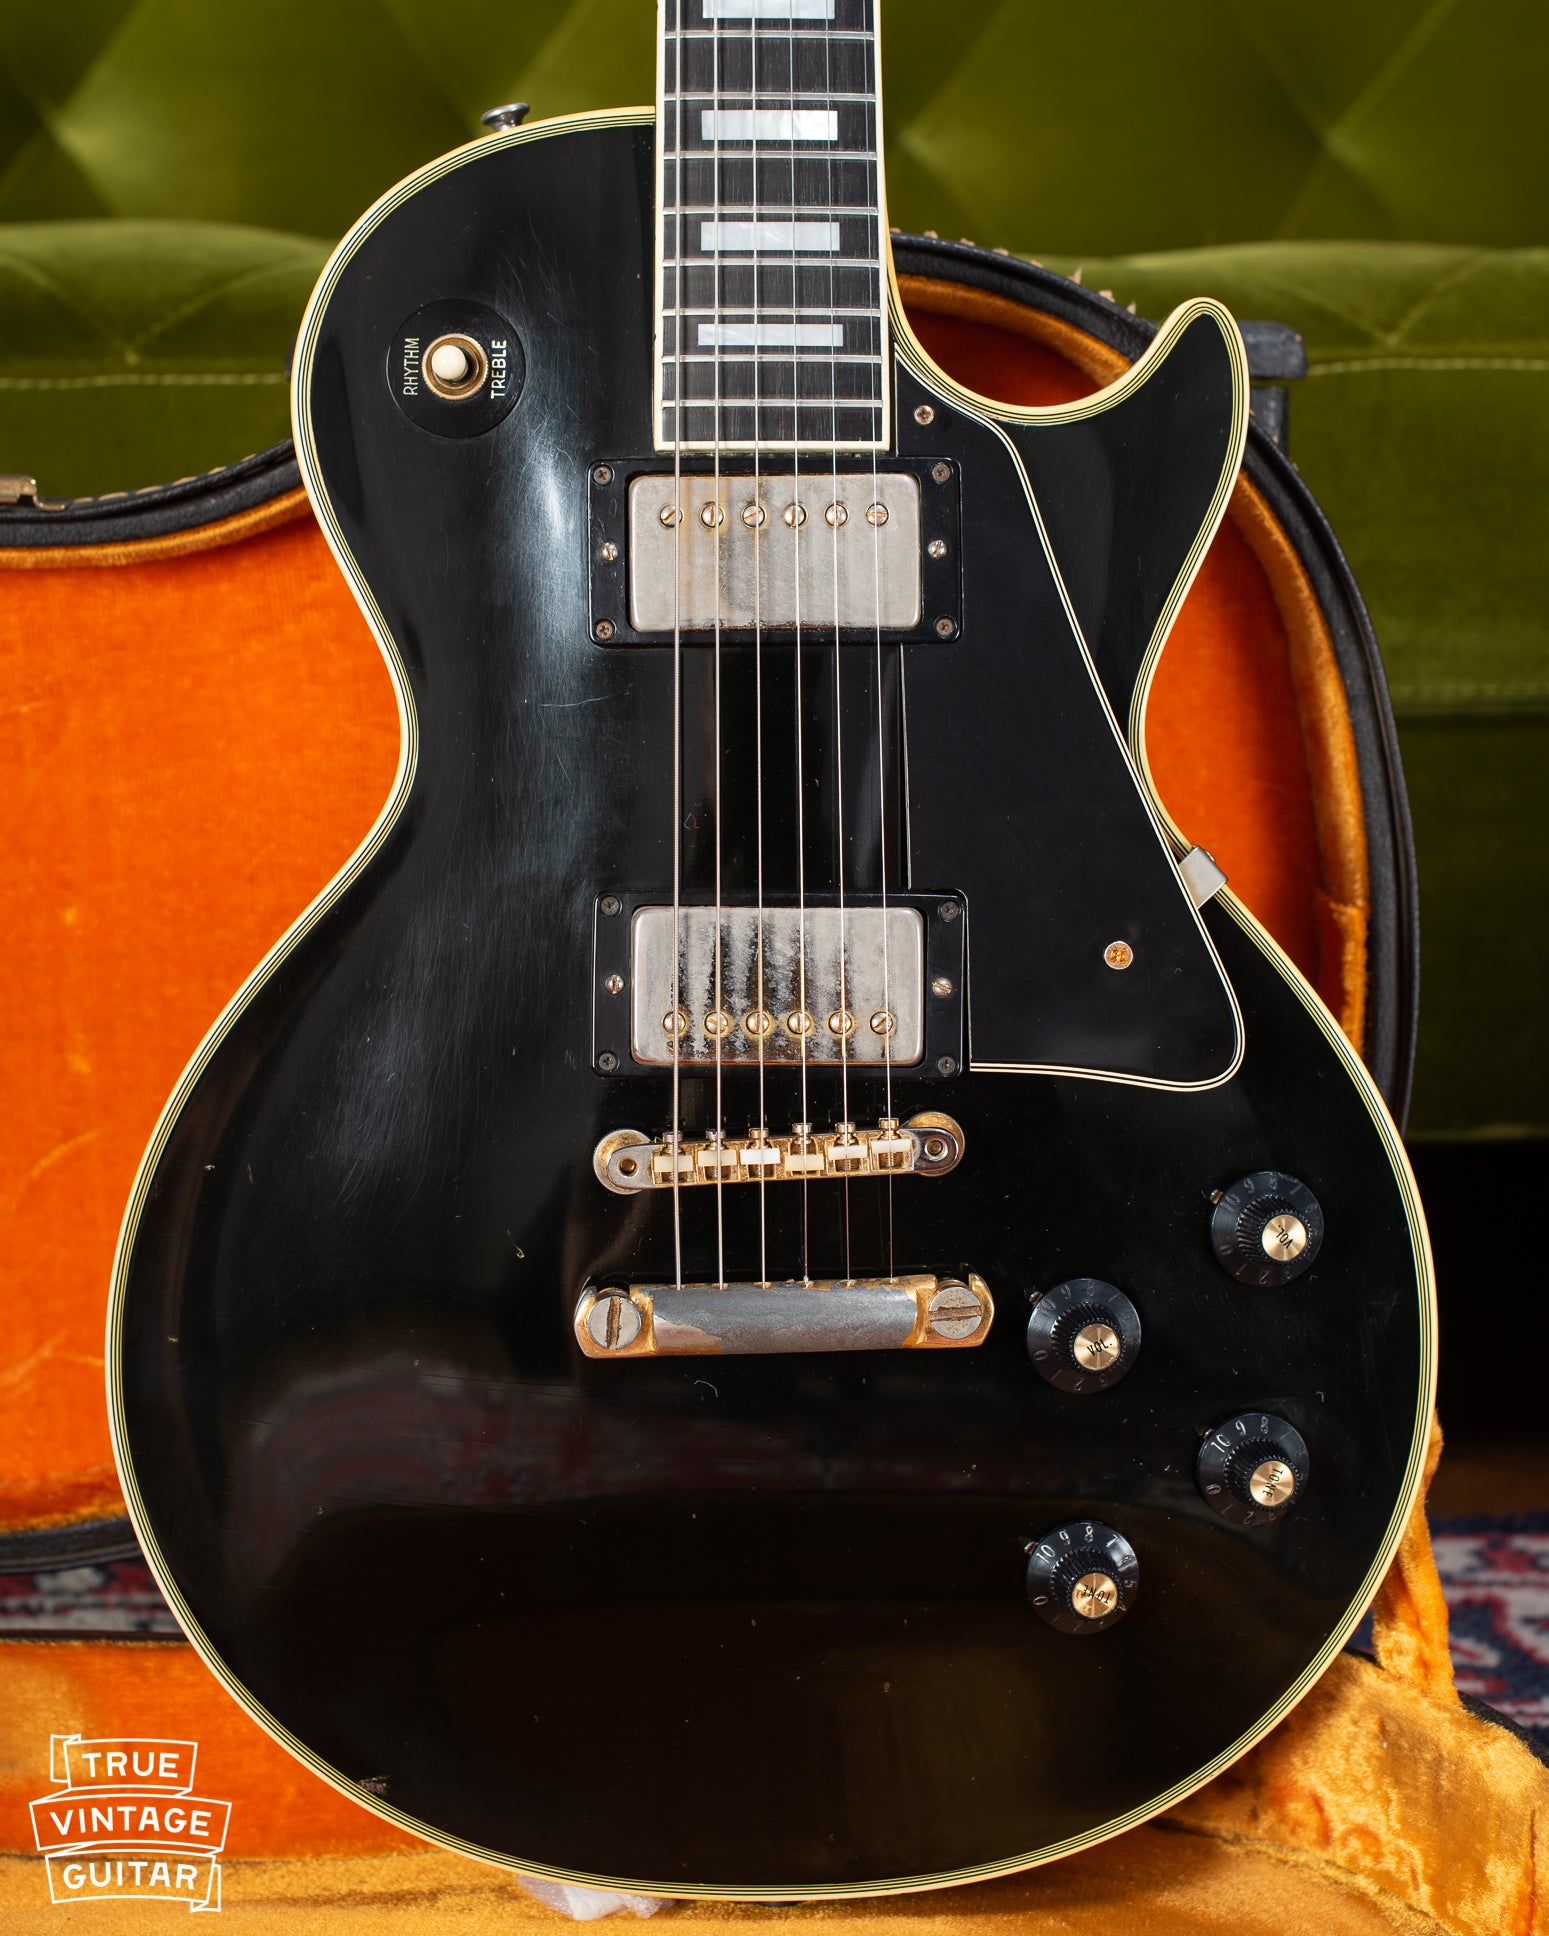 1968 Gibson Les Paul guitar black